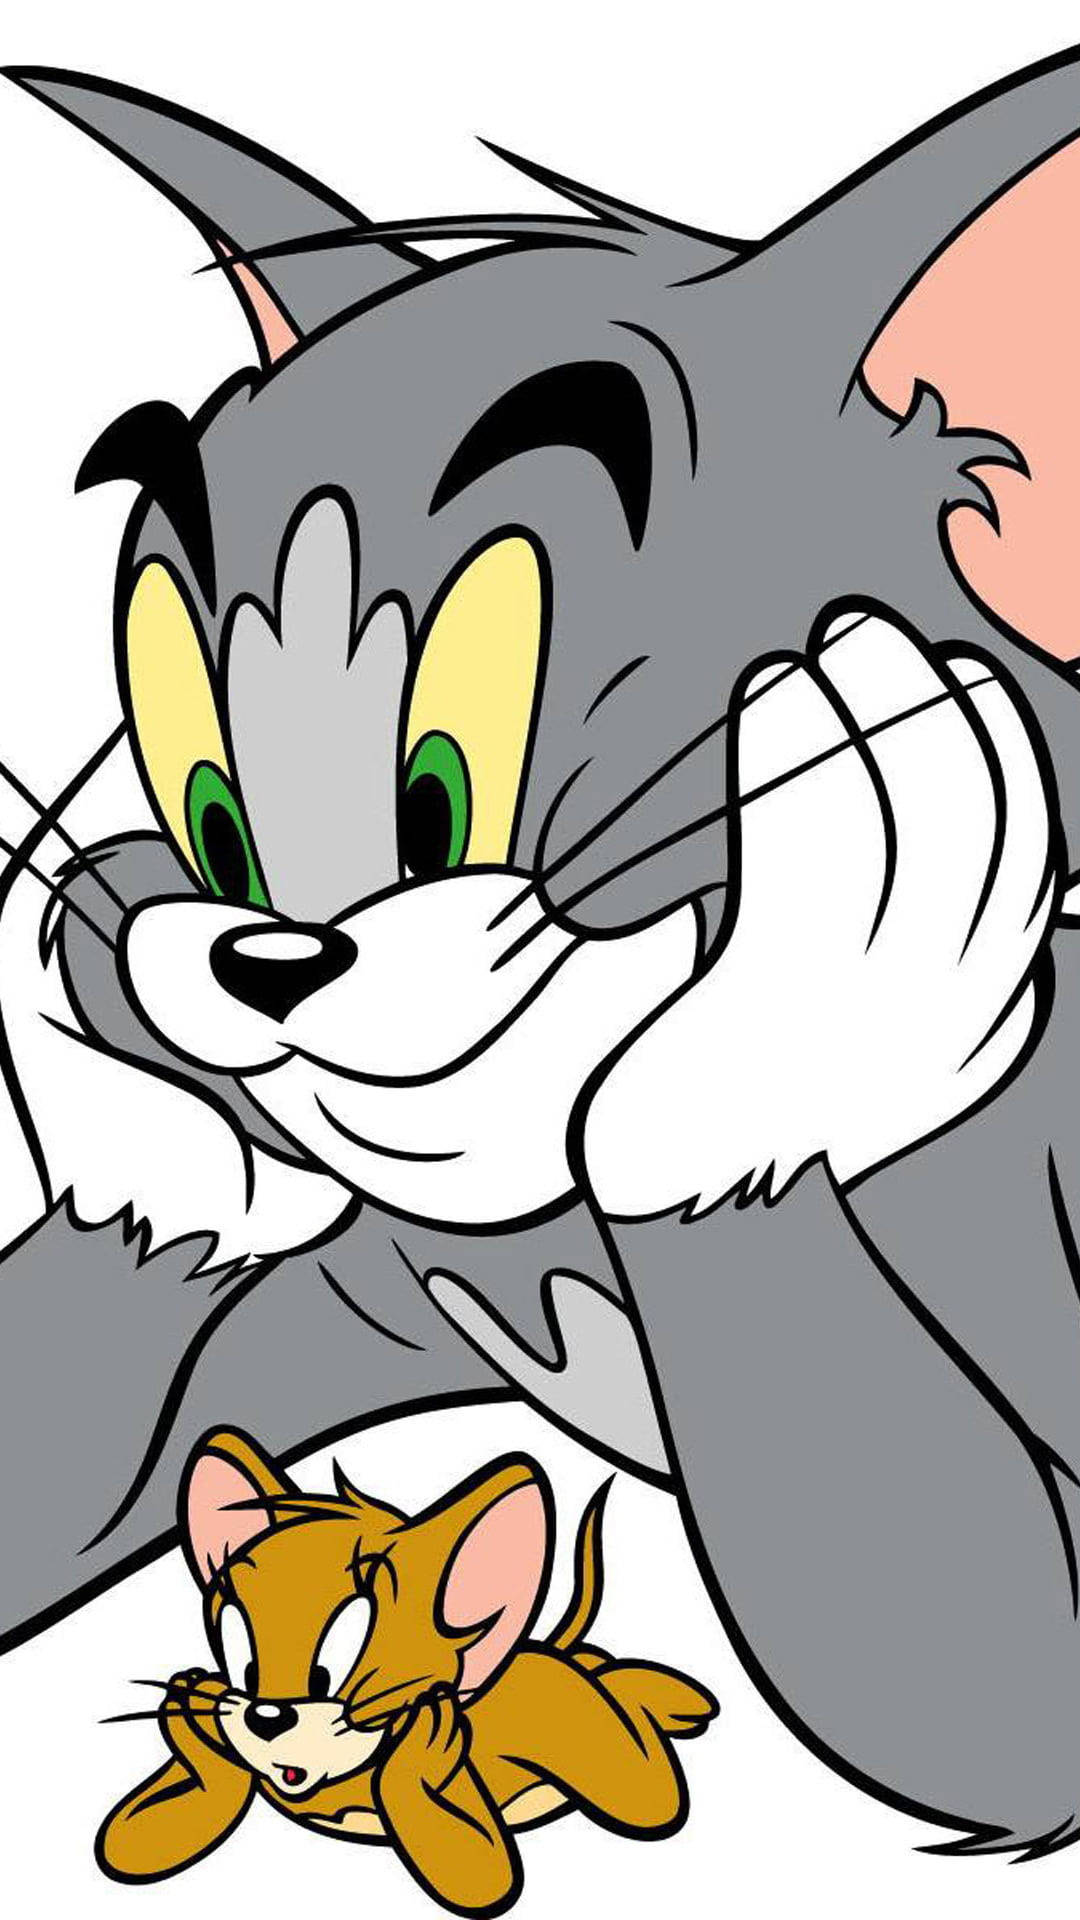 Tom на телефон. Tom and Jerry. Том и Джерри Джерри. Том и Джерри (Tom and Jerry) 1940. Том и Джерри Дисней.